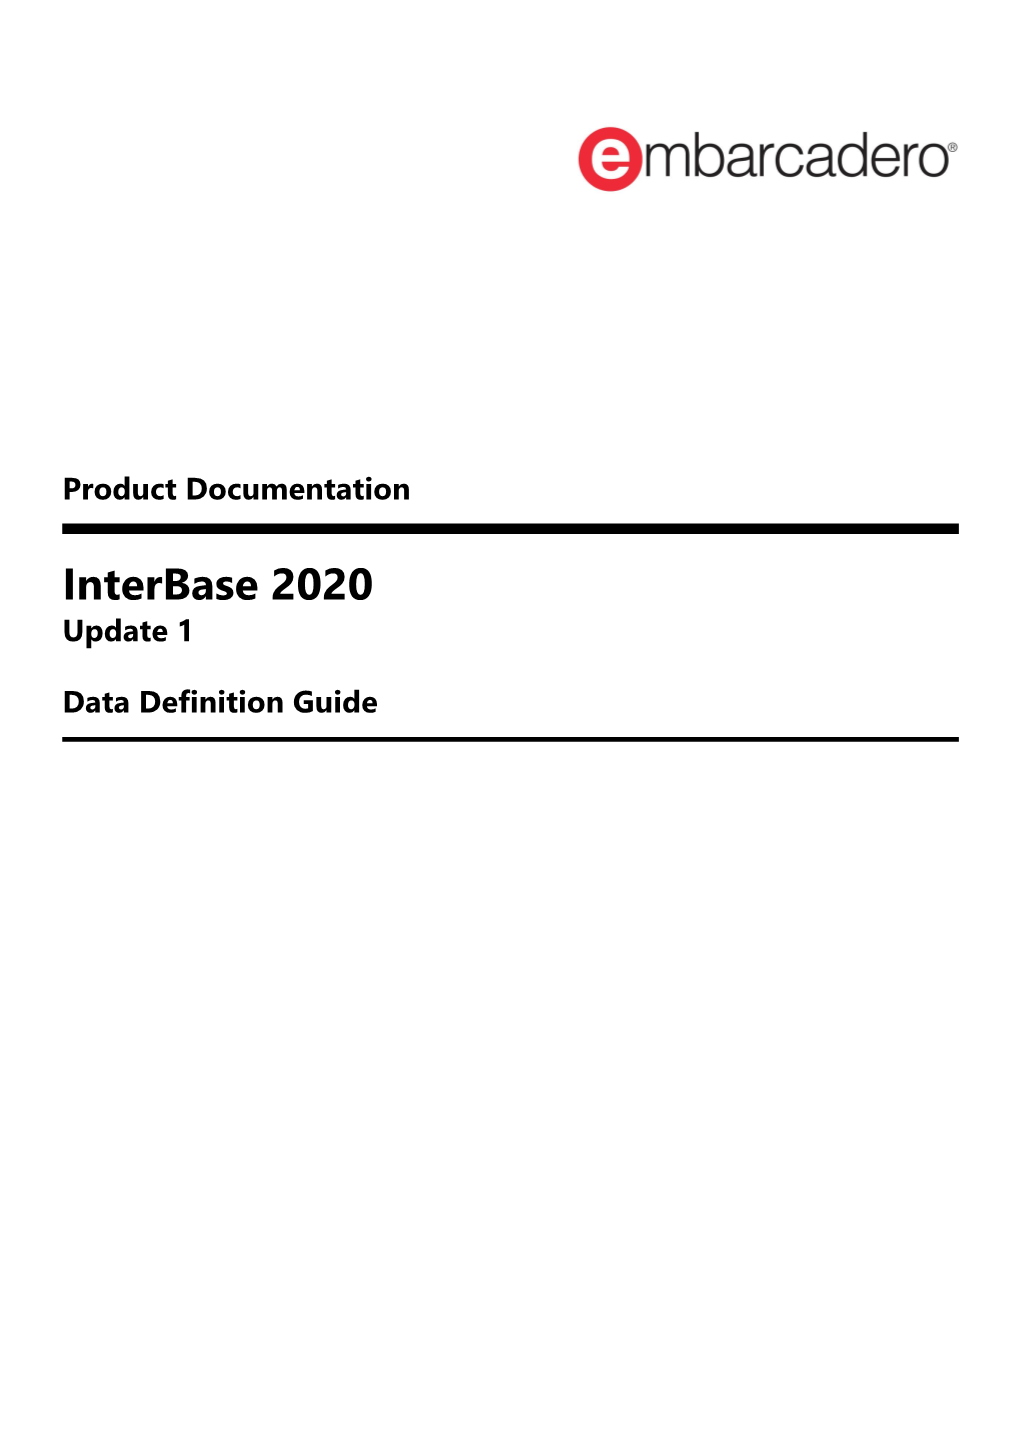 Data Definition Guide © 2020 Embarcadero Technologies, Inc